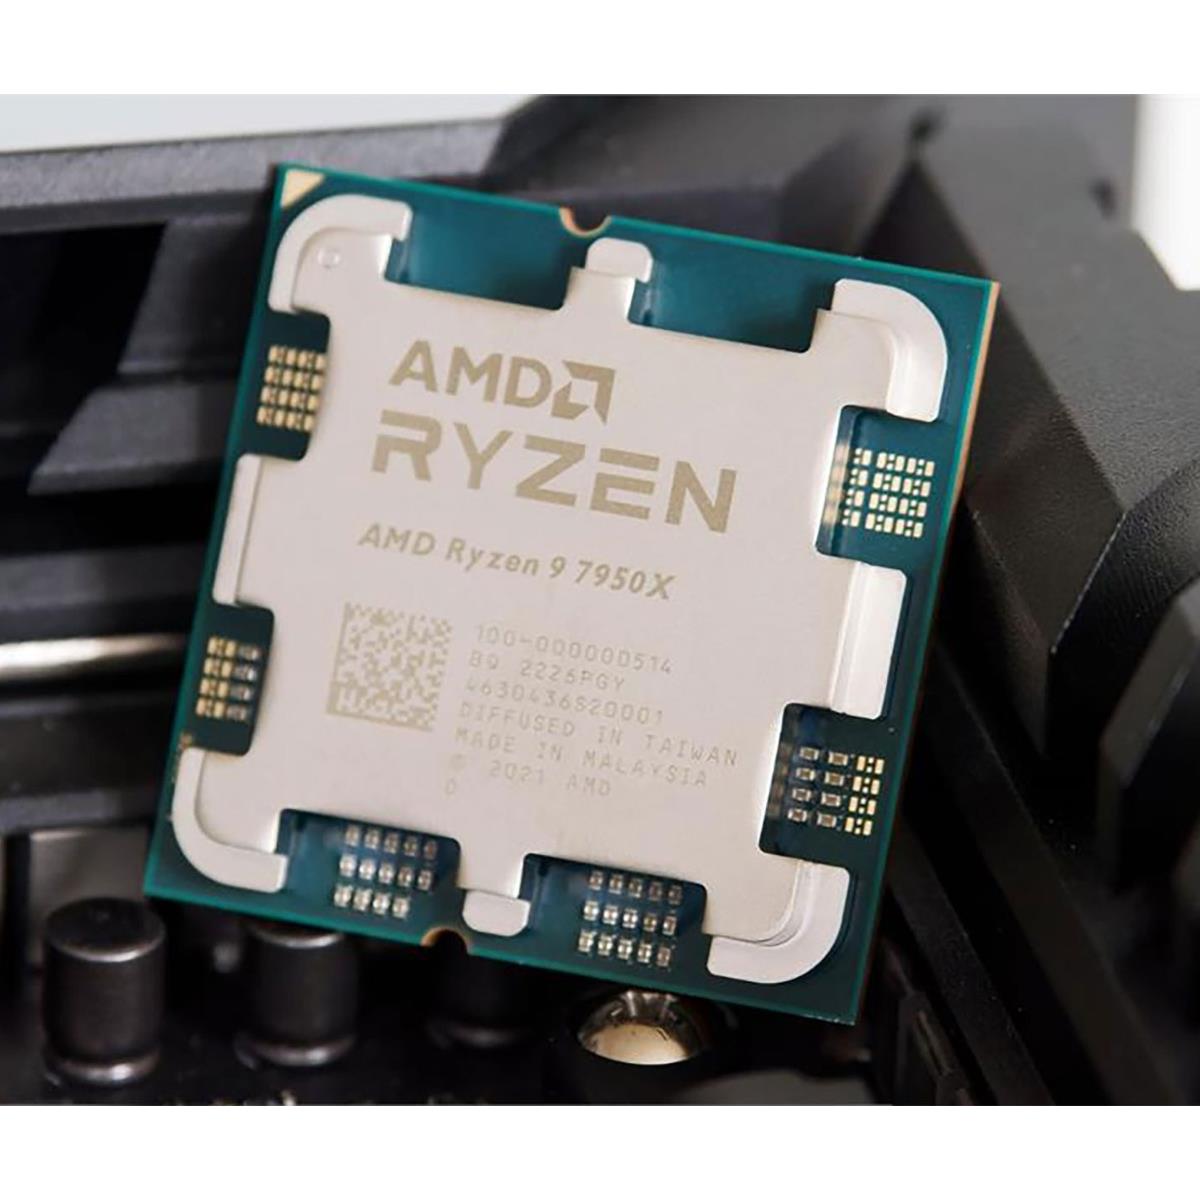 AMD Ryzen 9 7950X CPU - Prosessorer 